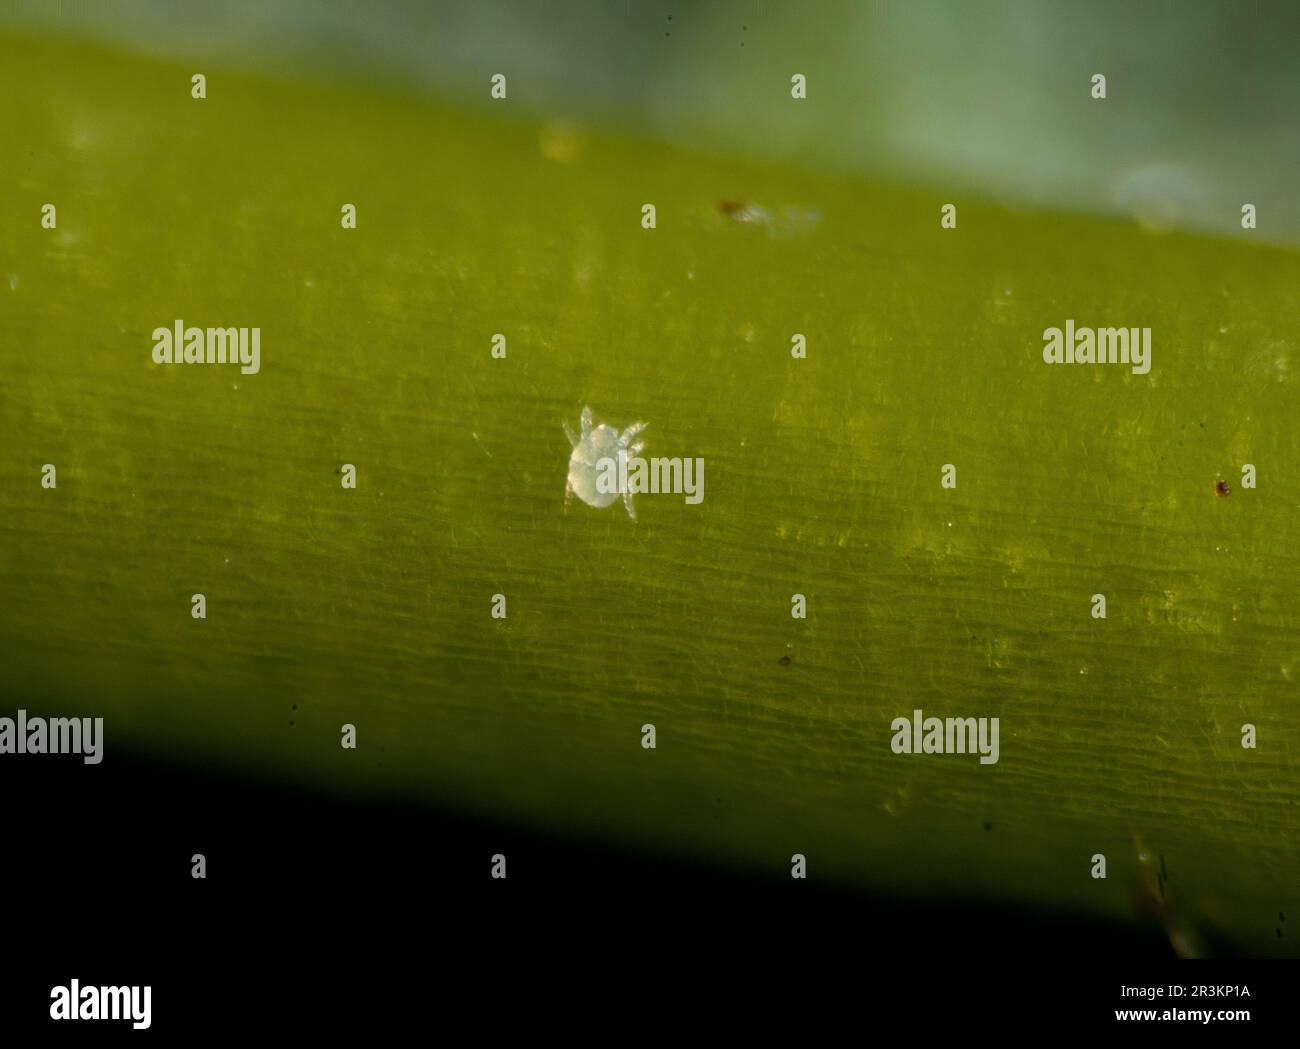 Sycamore gall mite, Aceria sp. Stock Photo